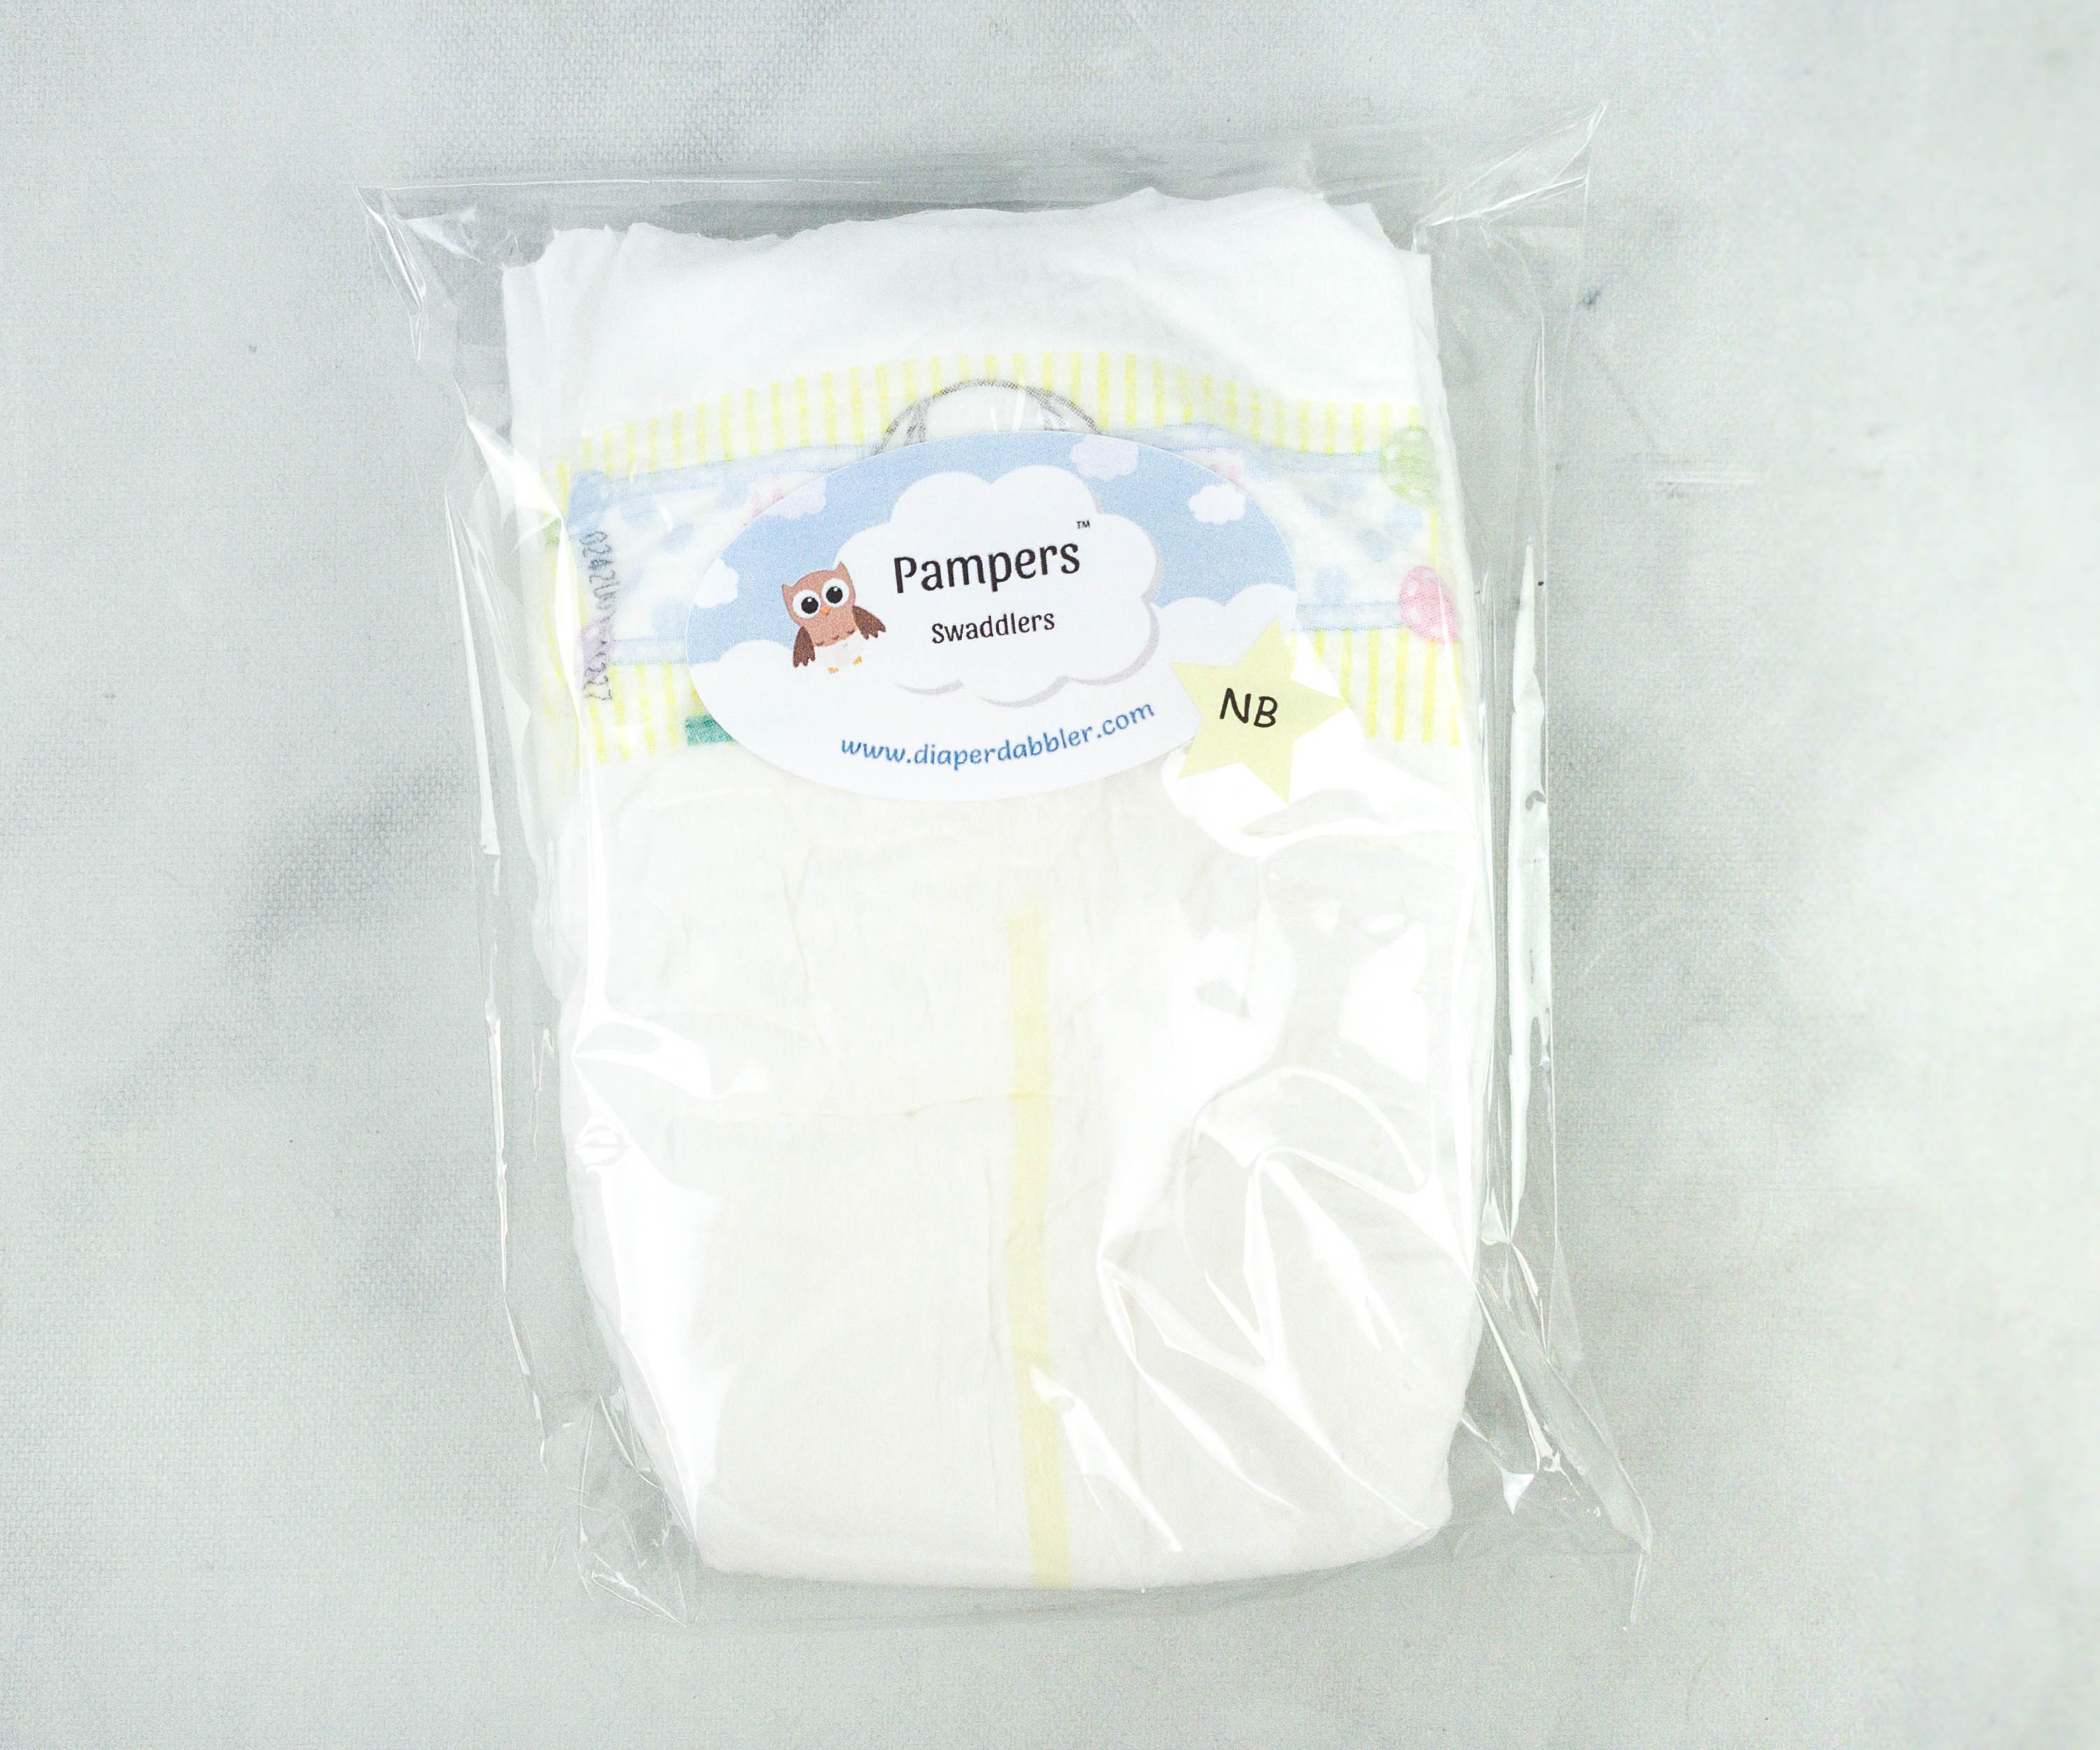 Diaper Dabbler Review - Newborn Babes Diaper Pack - Hello Subscription